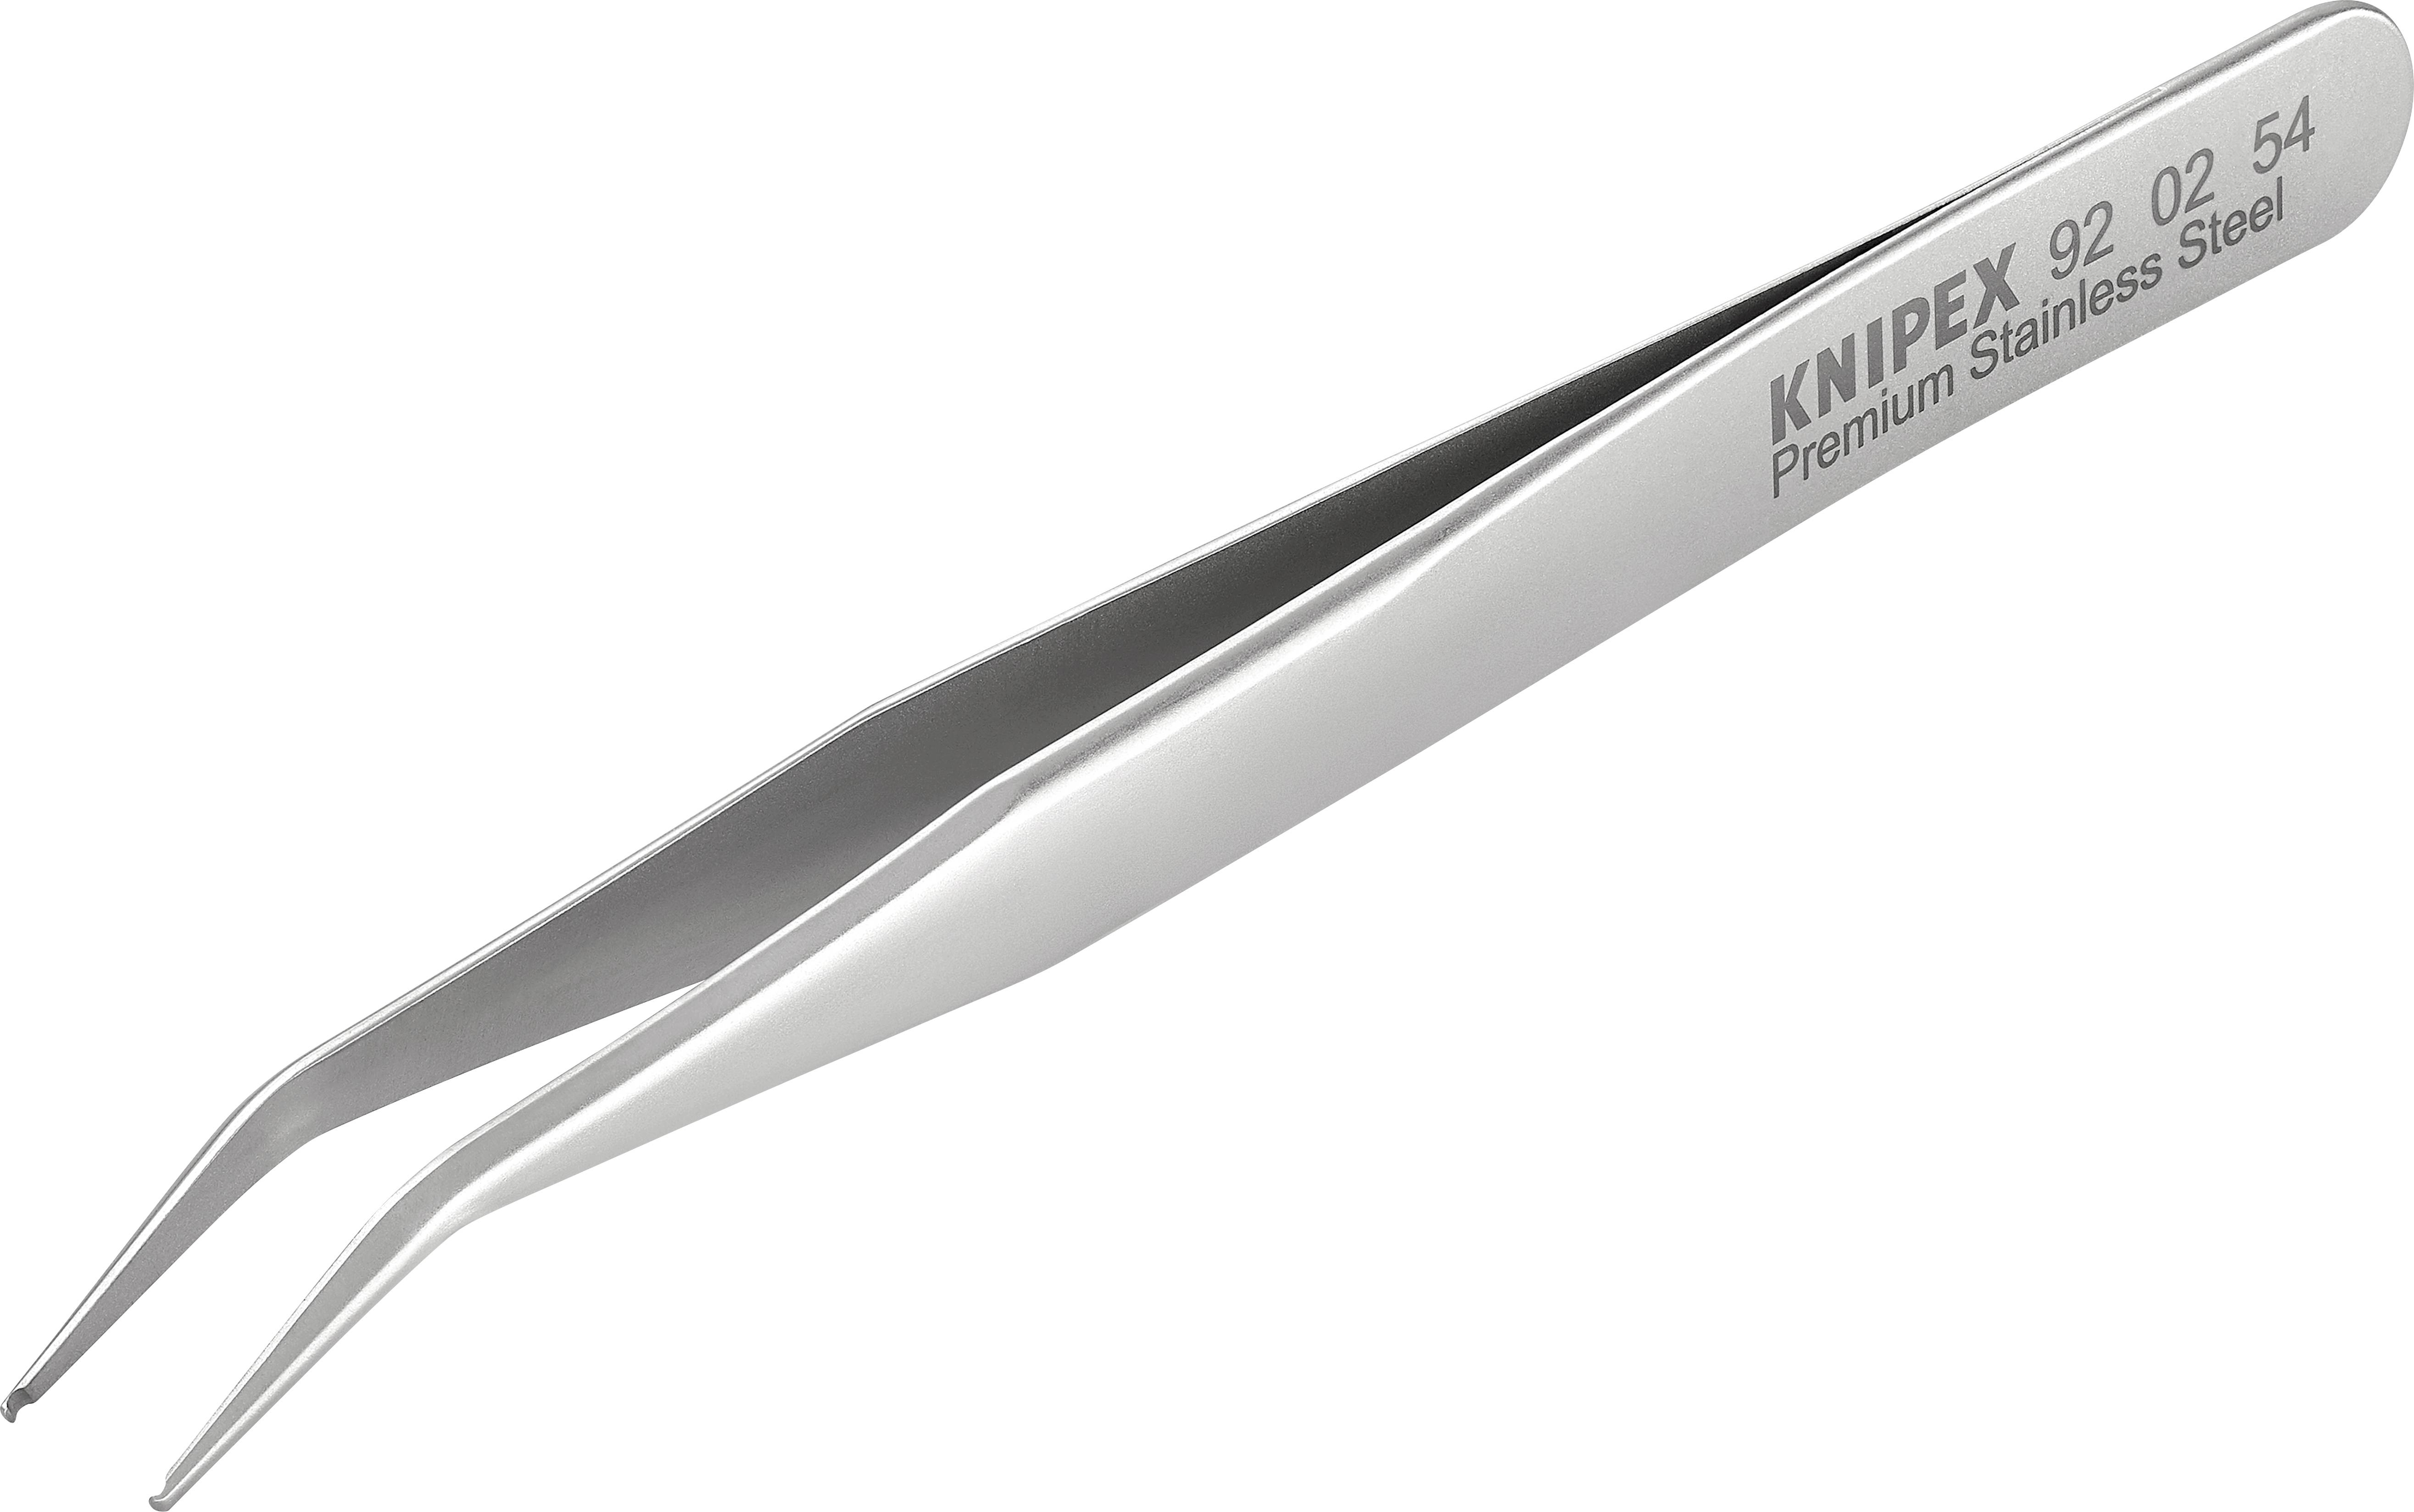 KNIPEX 115 mm 92 02 54 (92 02 54)